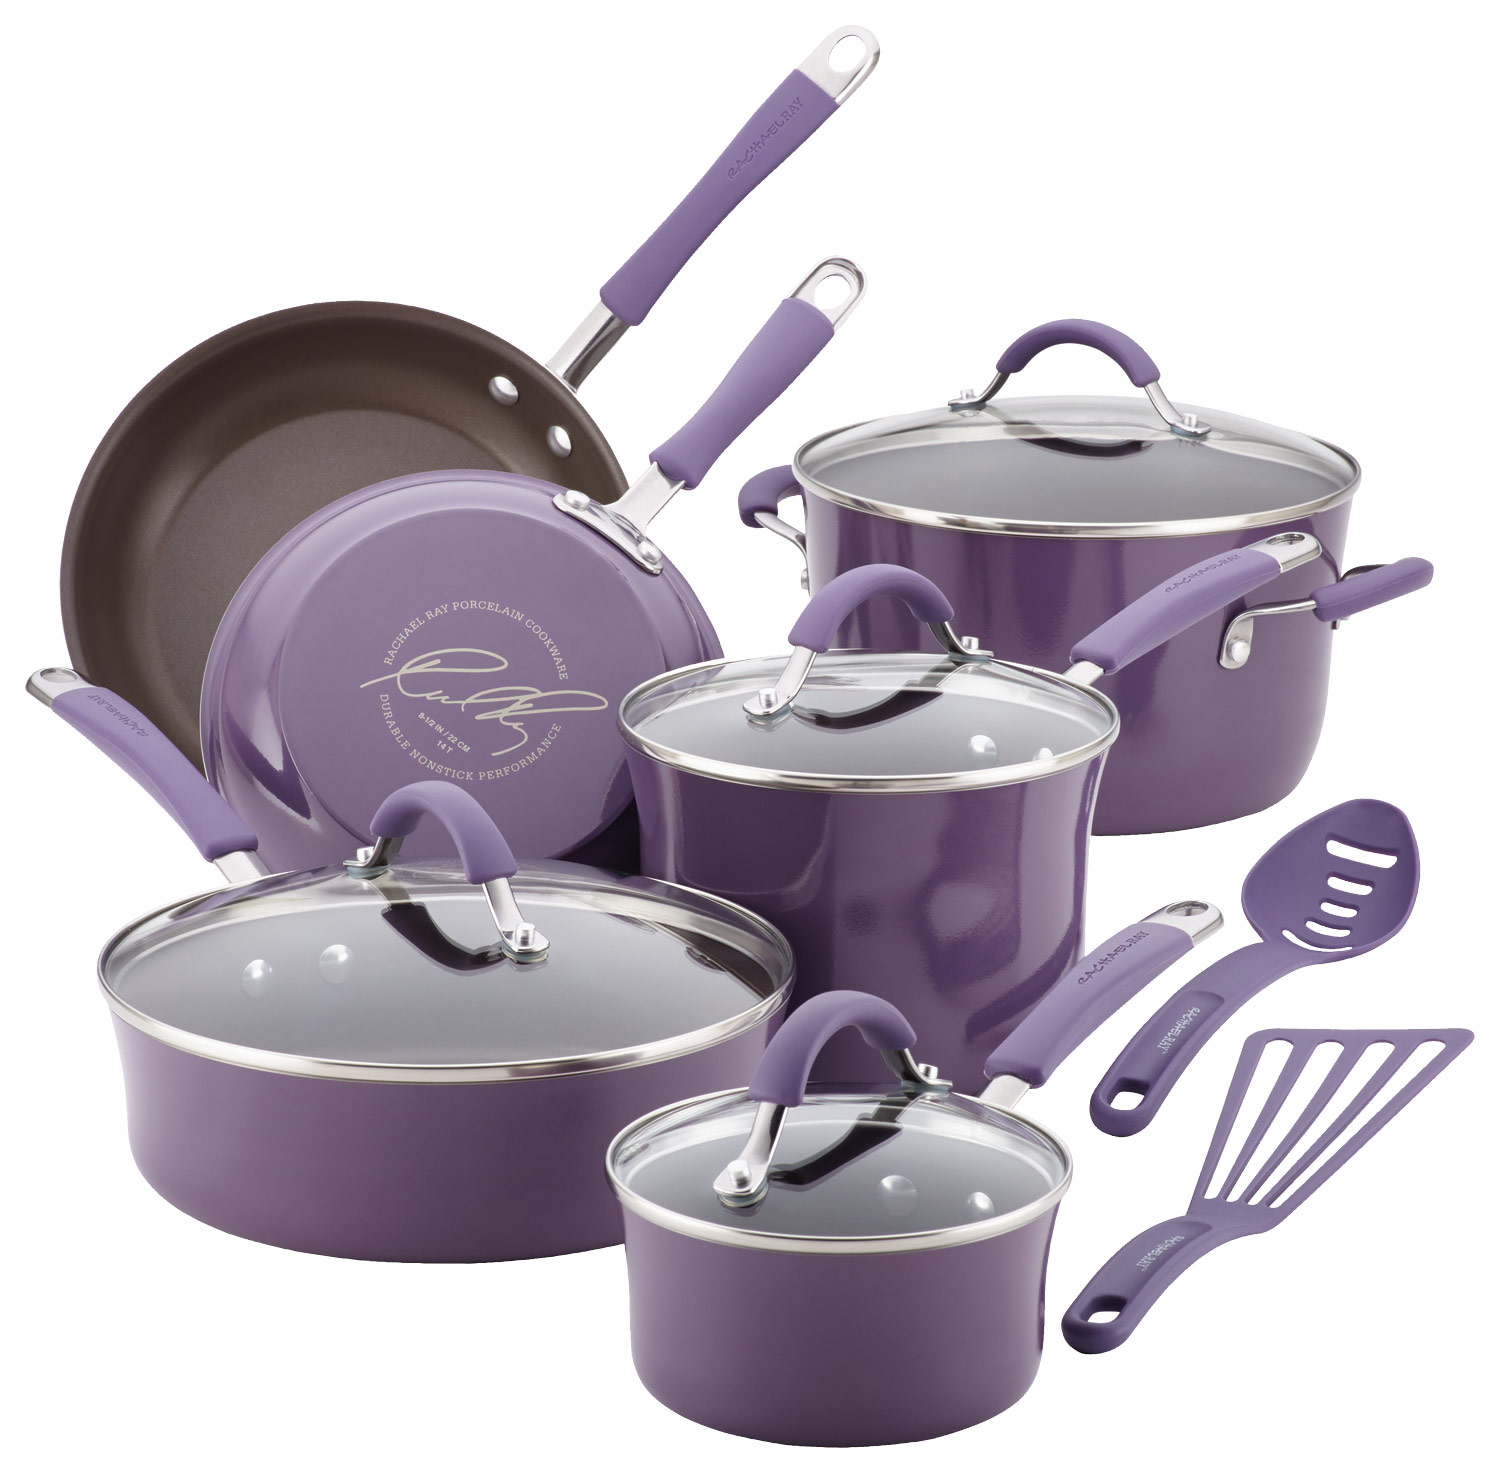 Rachael Ray - Cucina 12-Piece Cookware Set - Espresso/Lavender Purple was $299.99 now $153.99 (49.0% off)